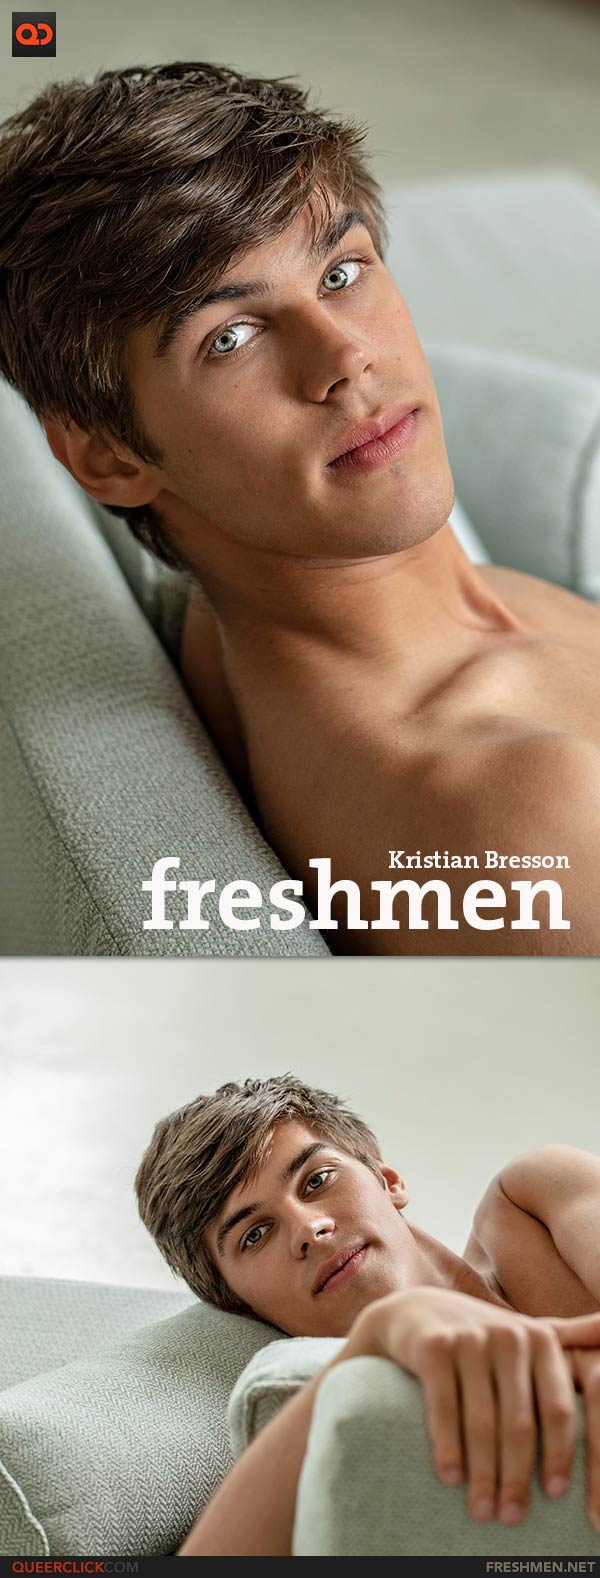 Freshmen: Kristian Bresson